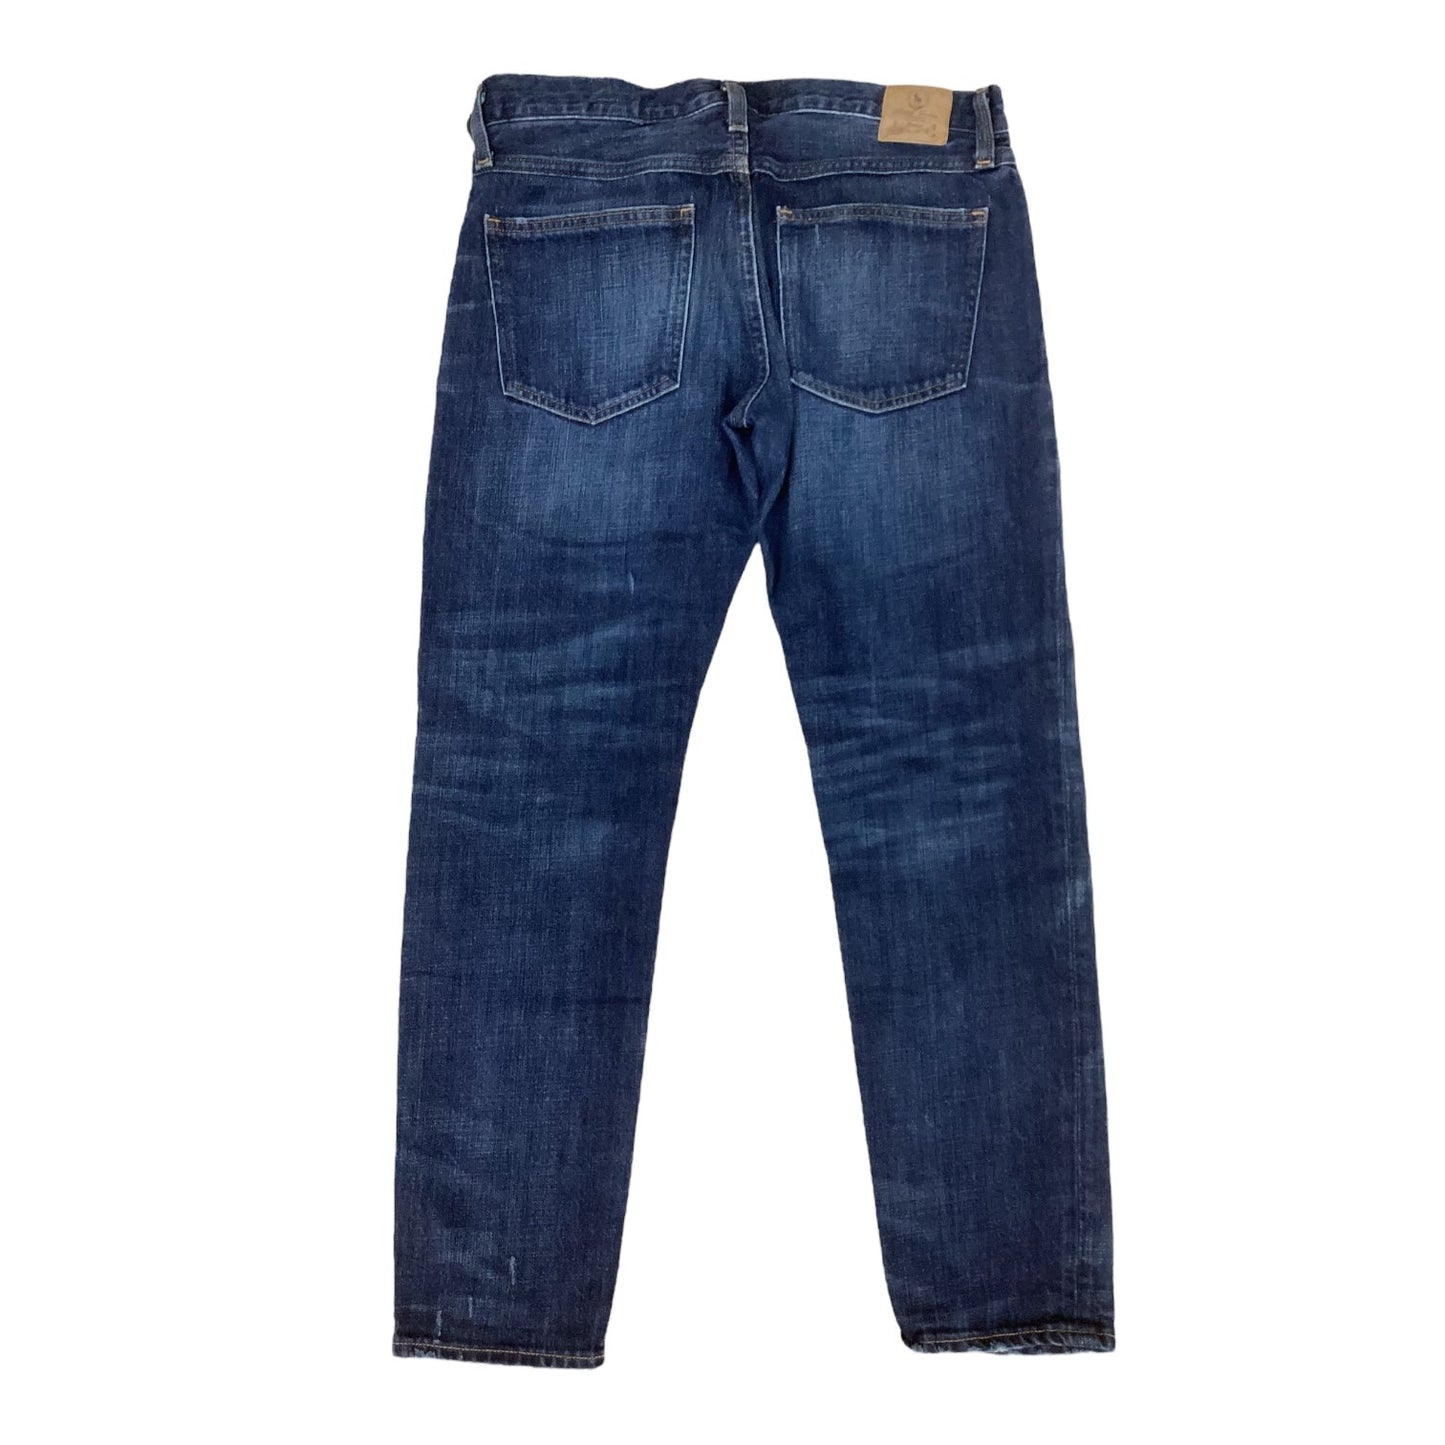 Jeans Skinny By Ralph Lauren  Size: 6